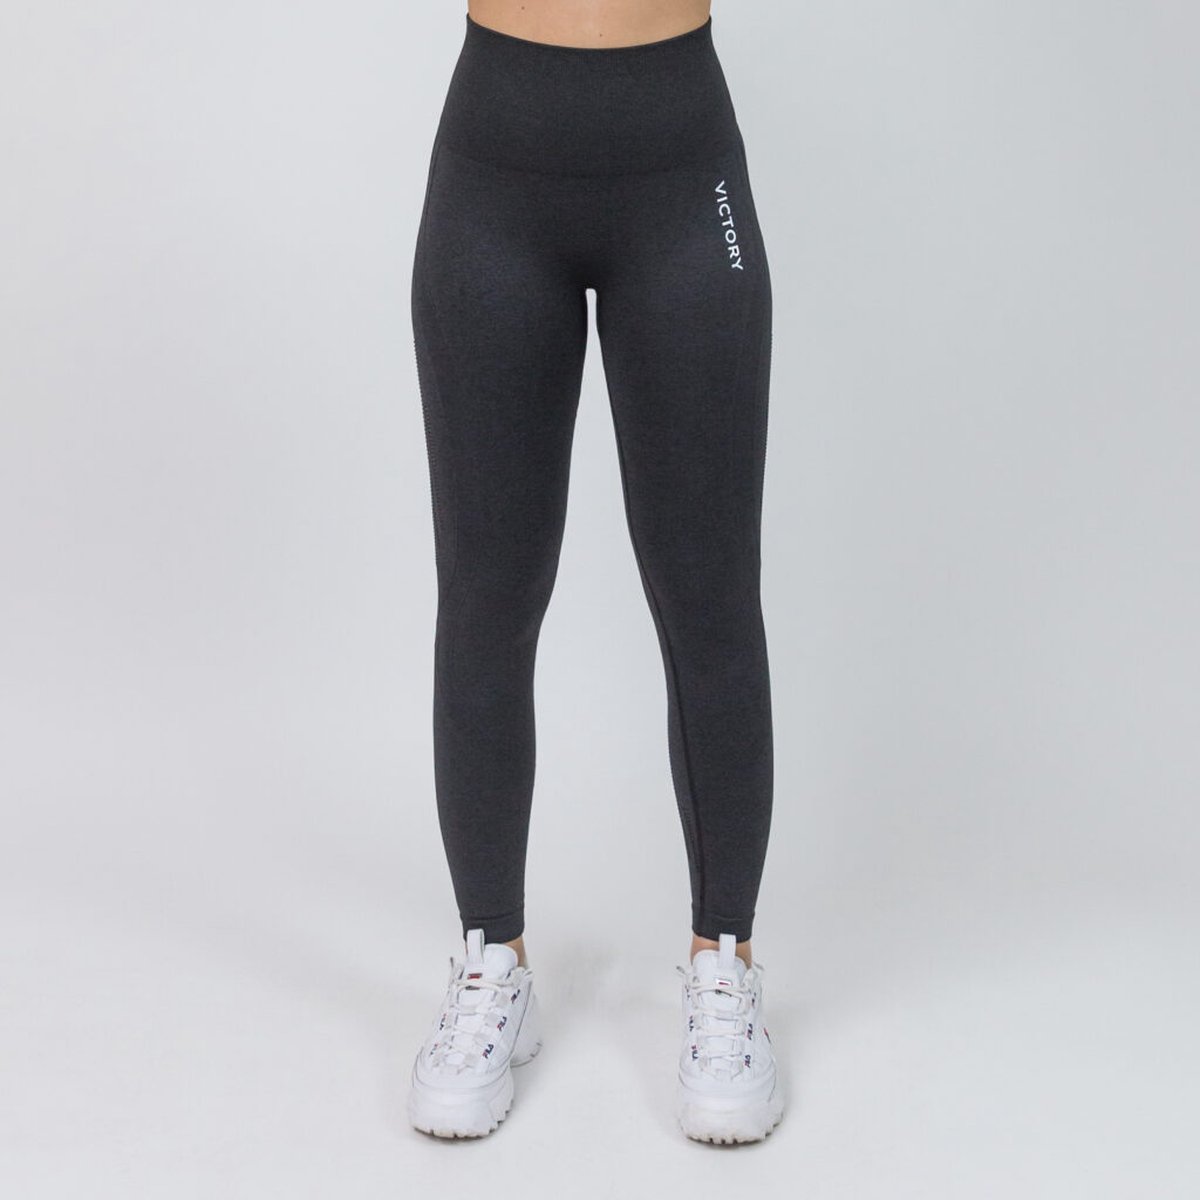 Victory Sportswear® - Dream - High Waist - Squat Proof Dames Sportlegging - Fitness Yoga Hardlopen - Zwart Maat XS/S